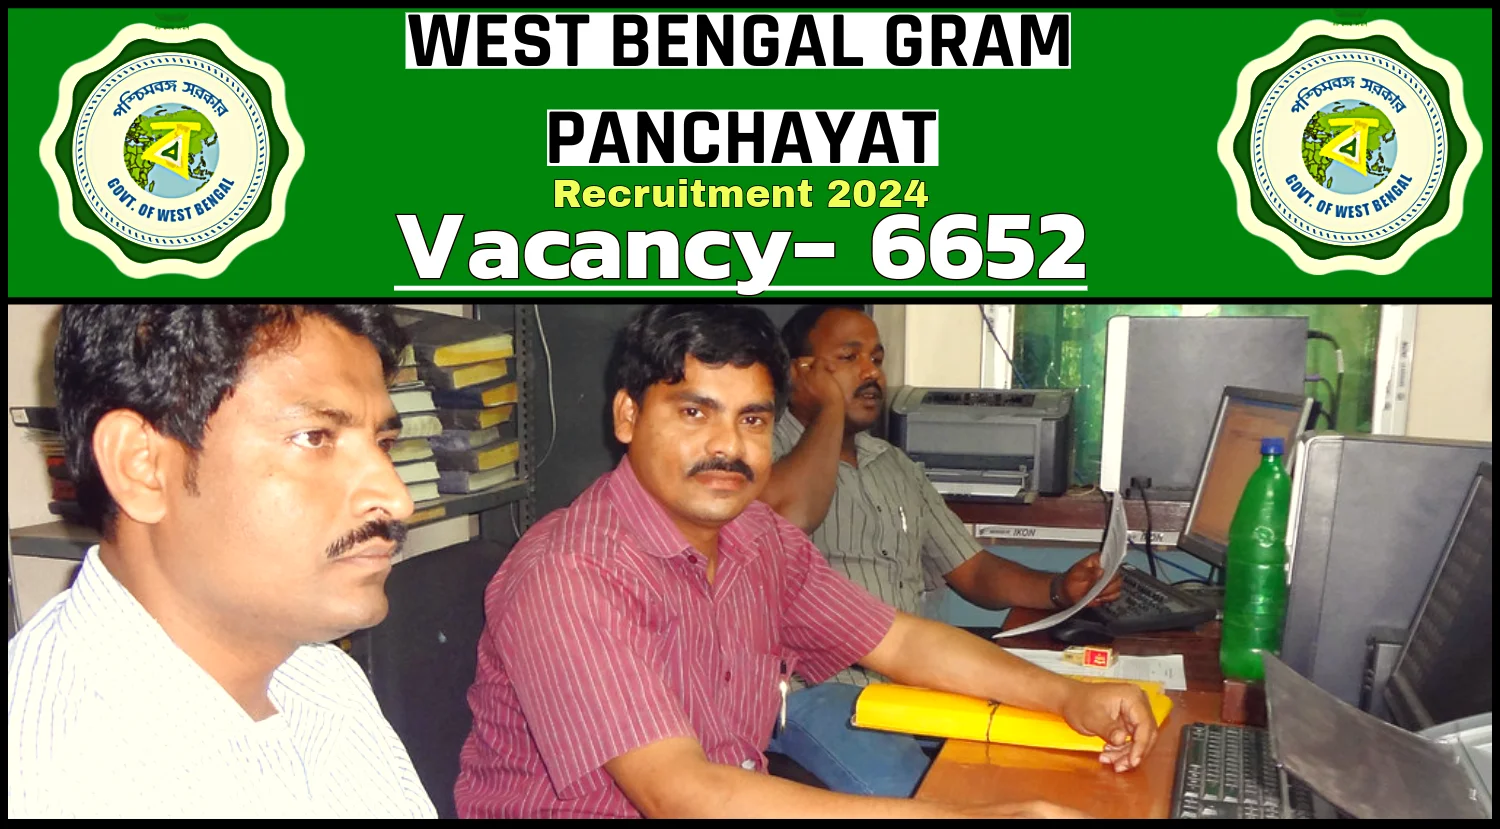 West Bengal Gram Panchayat Recruitment Notification 2024 for 6652 Vacancies, Check Vacancy Details Now